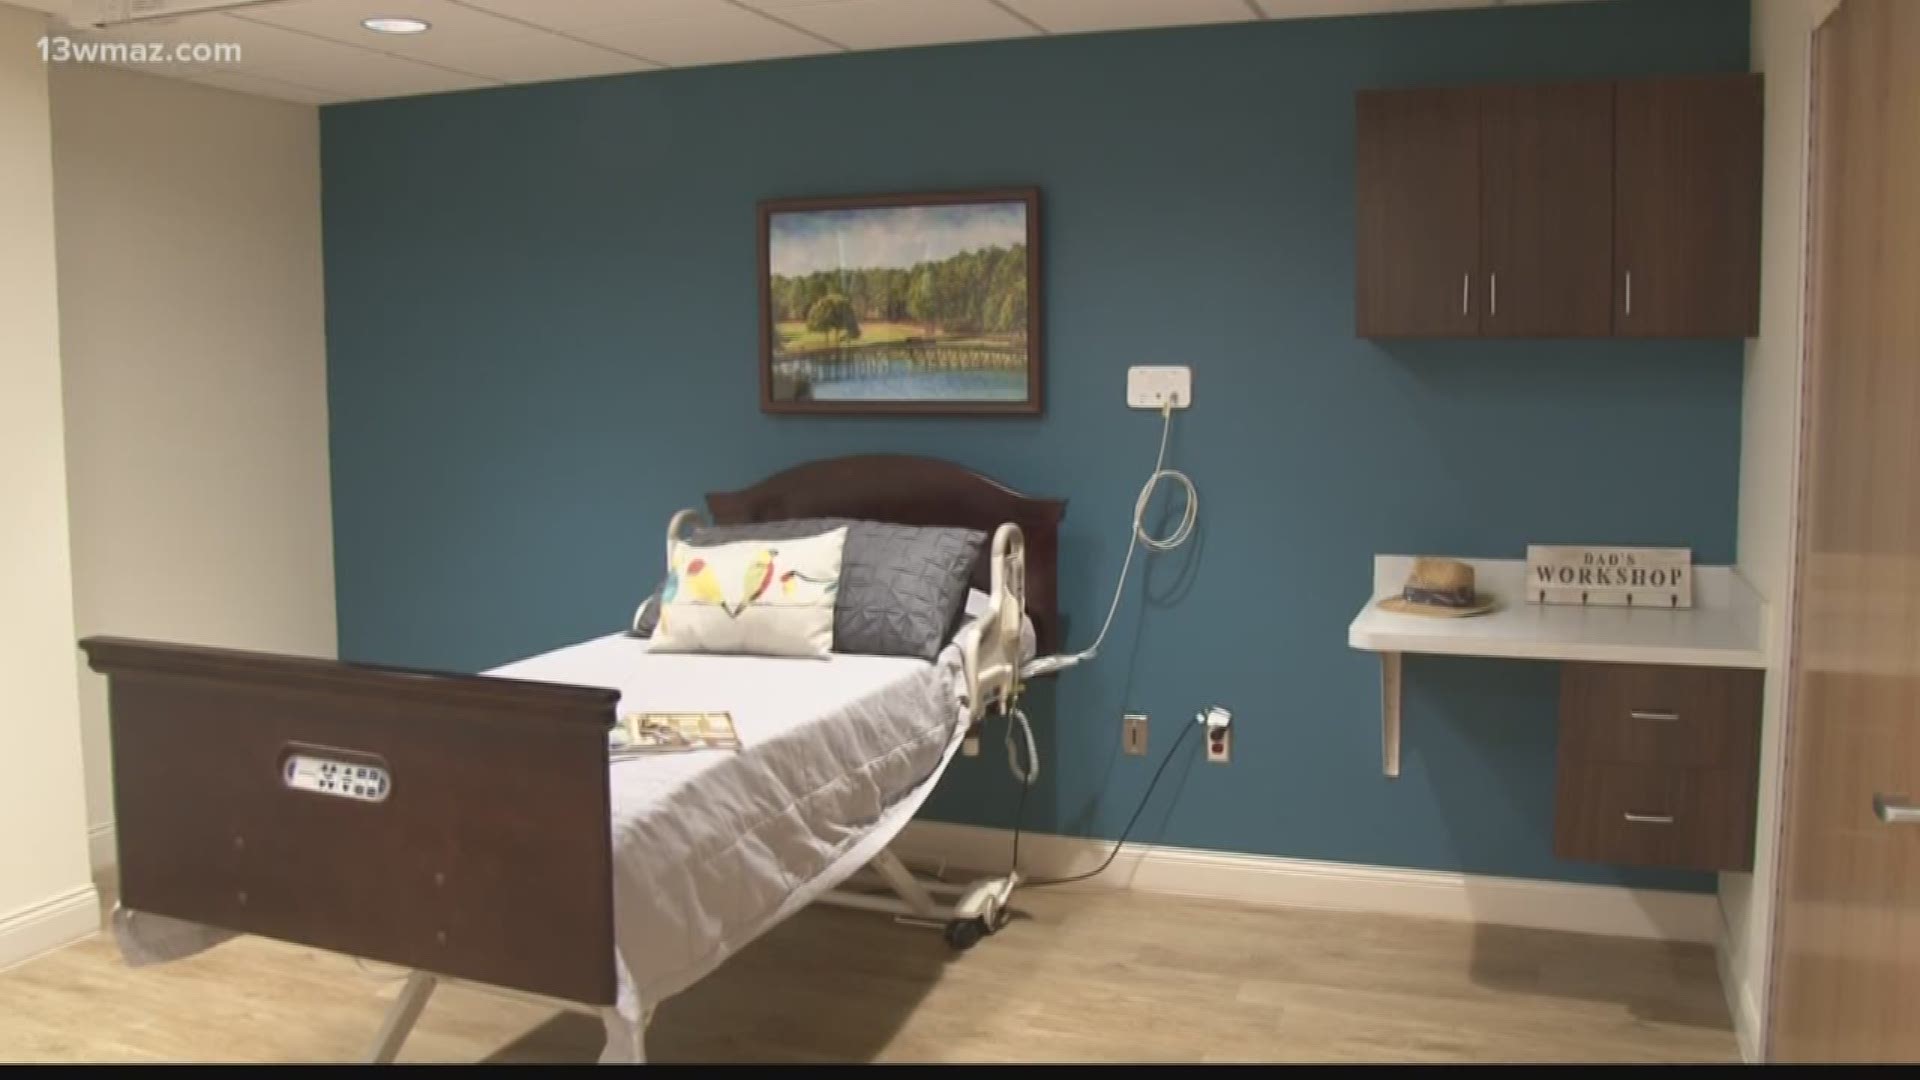 Carl Vinson memory care unit adds 14 rooms